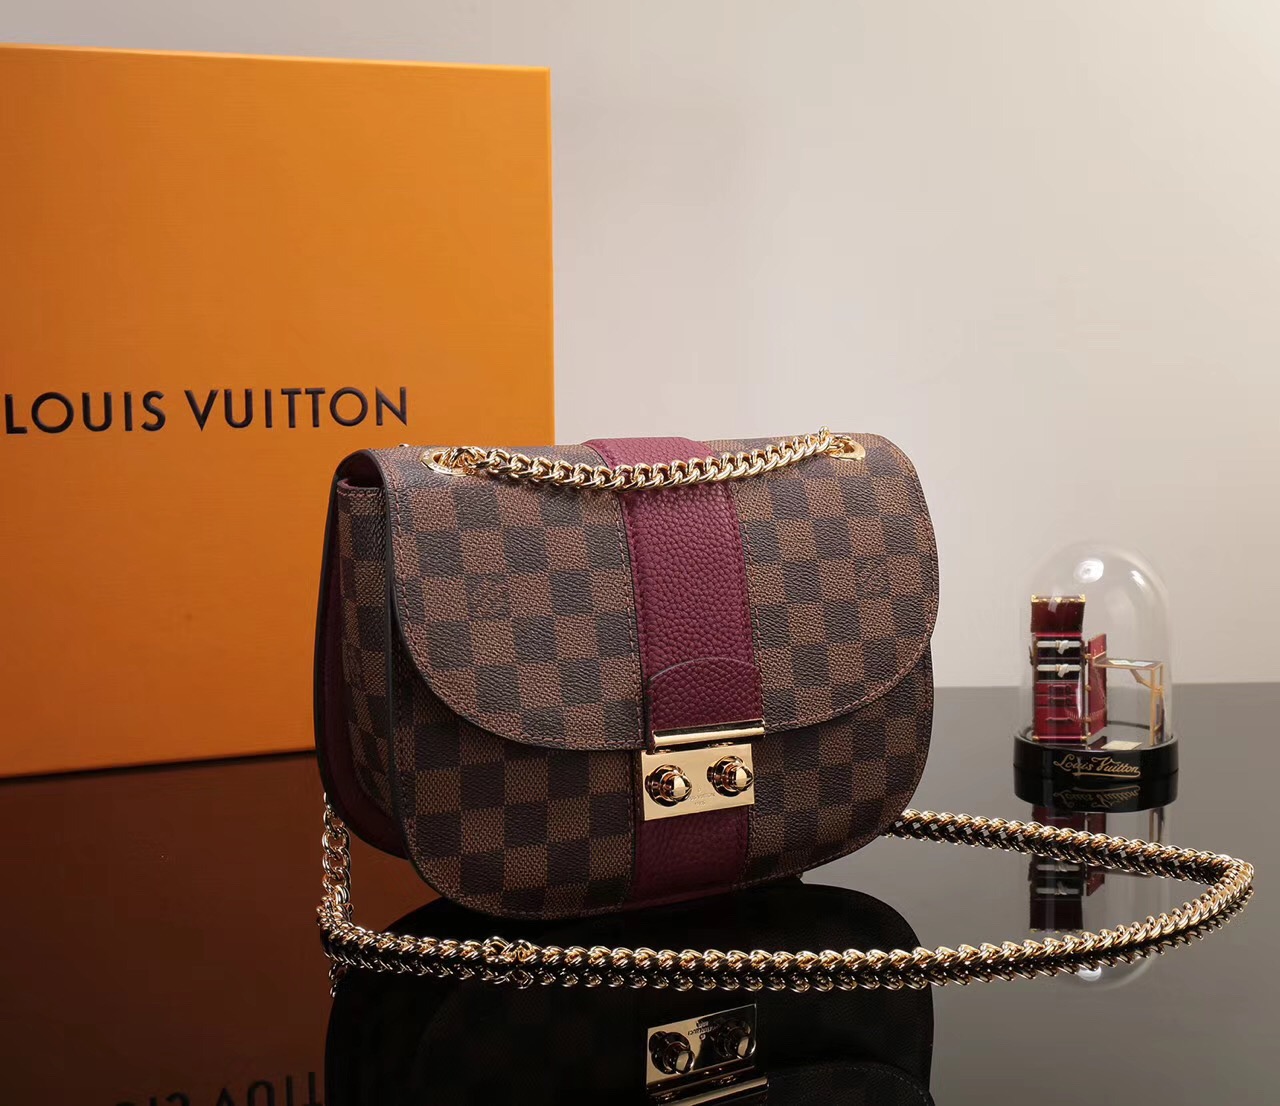 LV Louis Vuitton Monogram Wight Shoulder Damier bags N64420 Handbags Wine [LV1069] - $299.00 ...